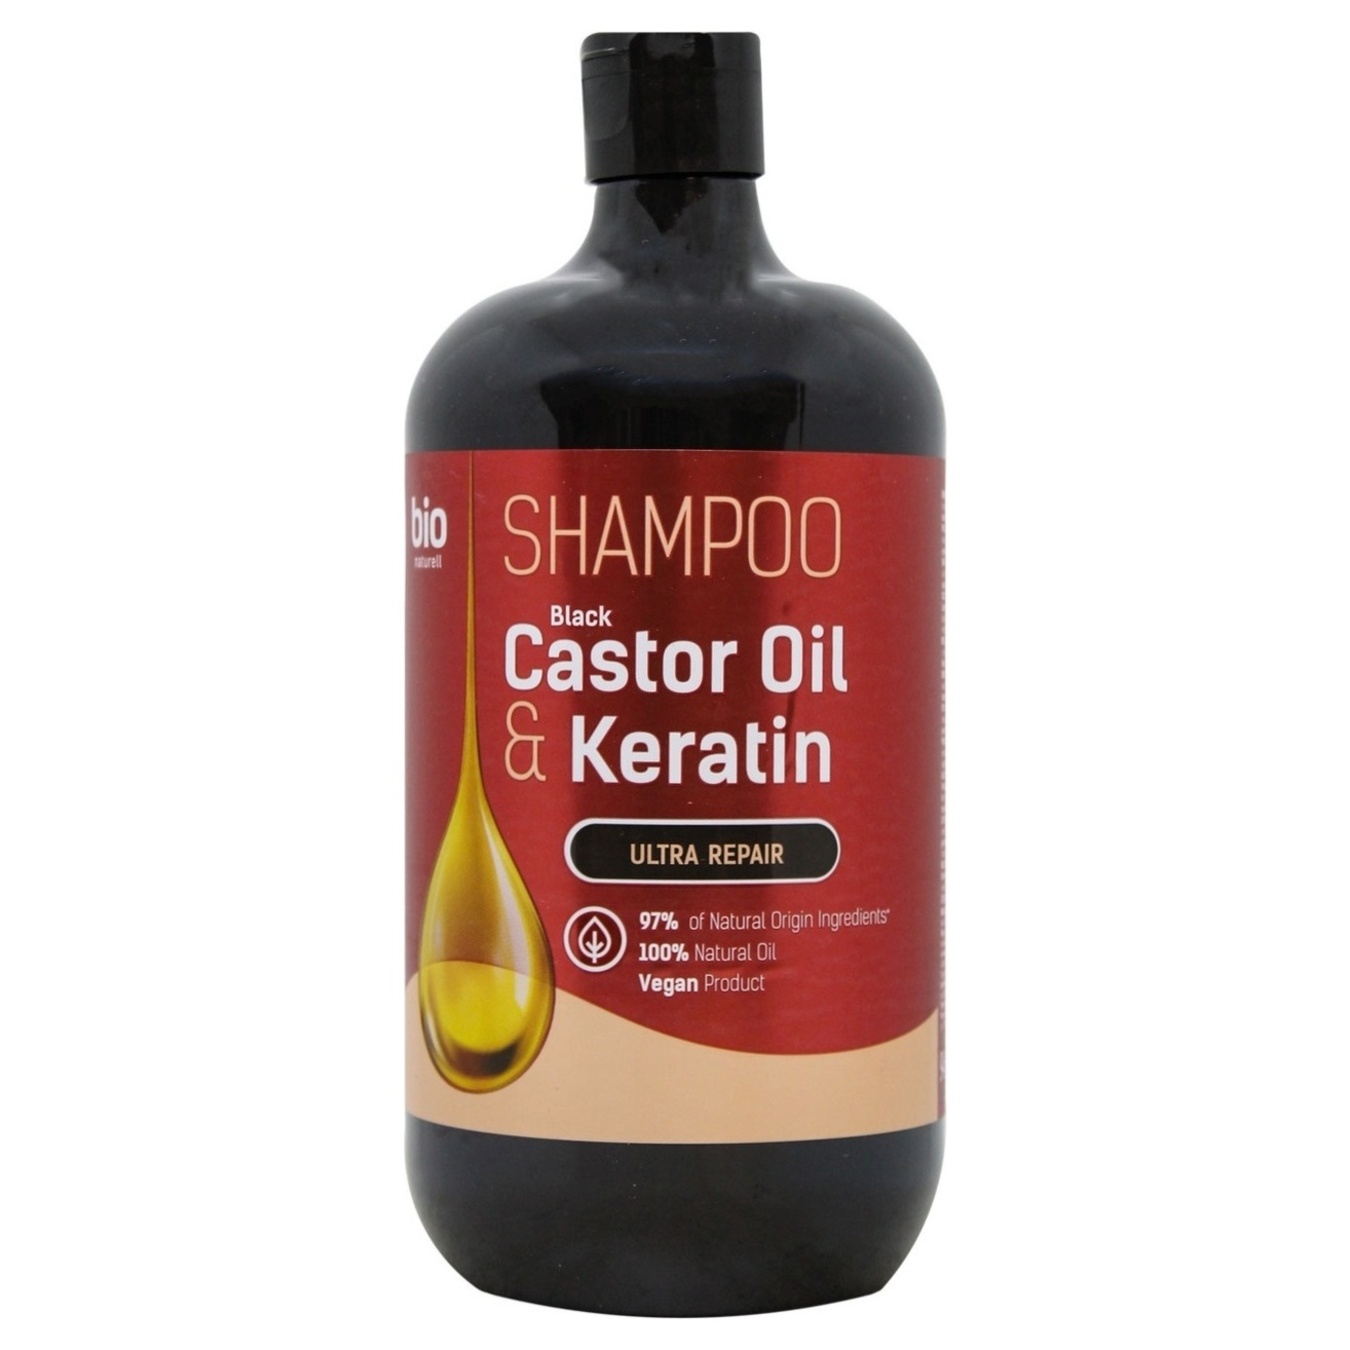 Bio Naturell shampoo for all hair types black castor oil and keratin 946 ml